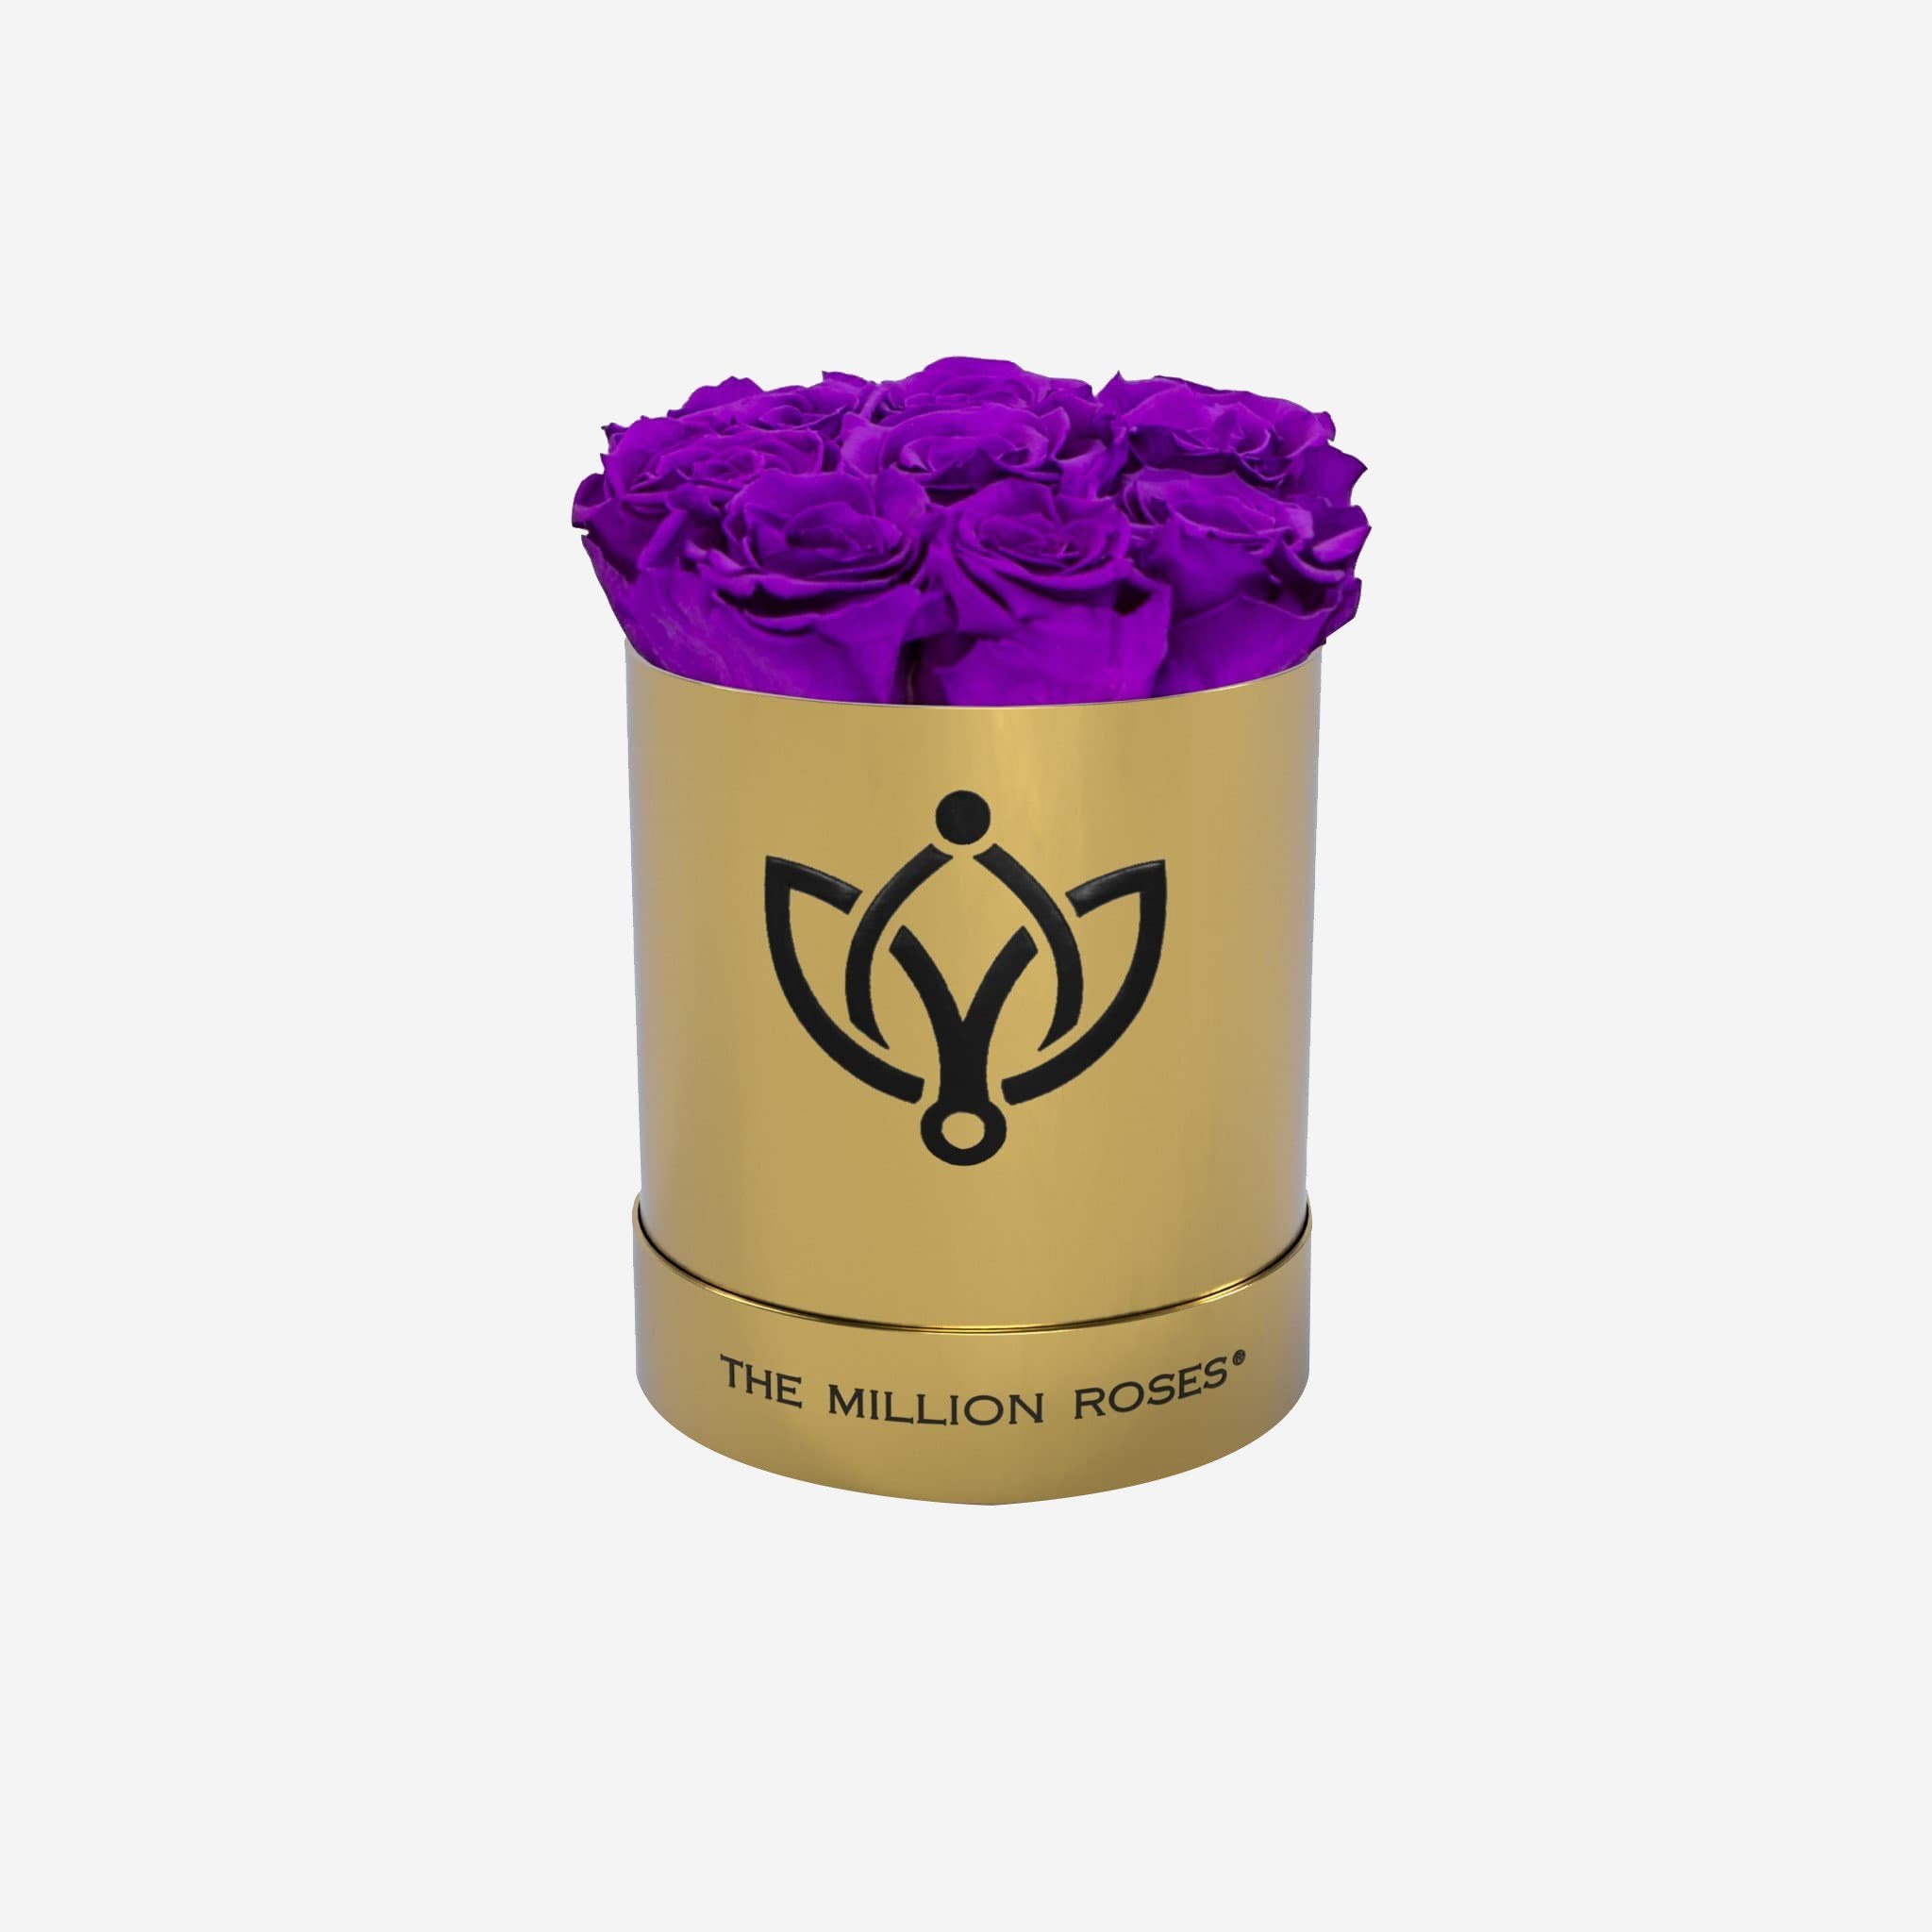 Basic Mirror Gold Box | Bright Purple Roses - The Million Roses